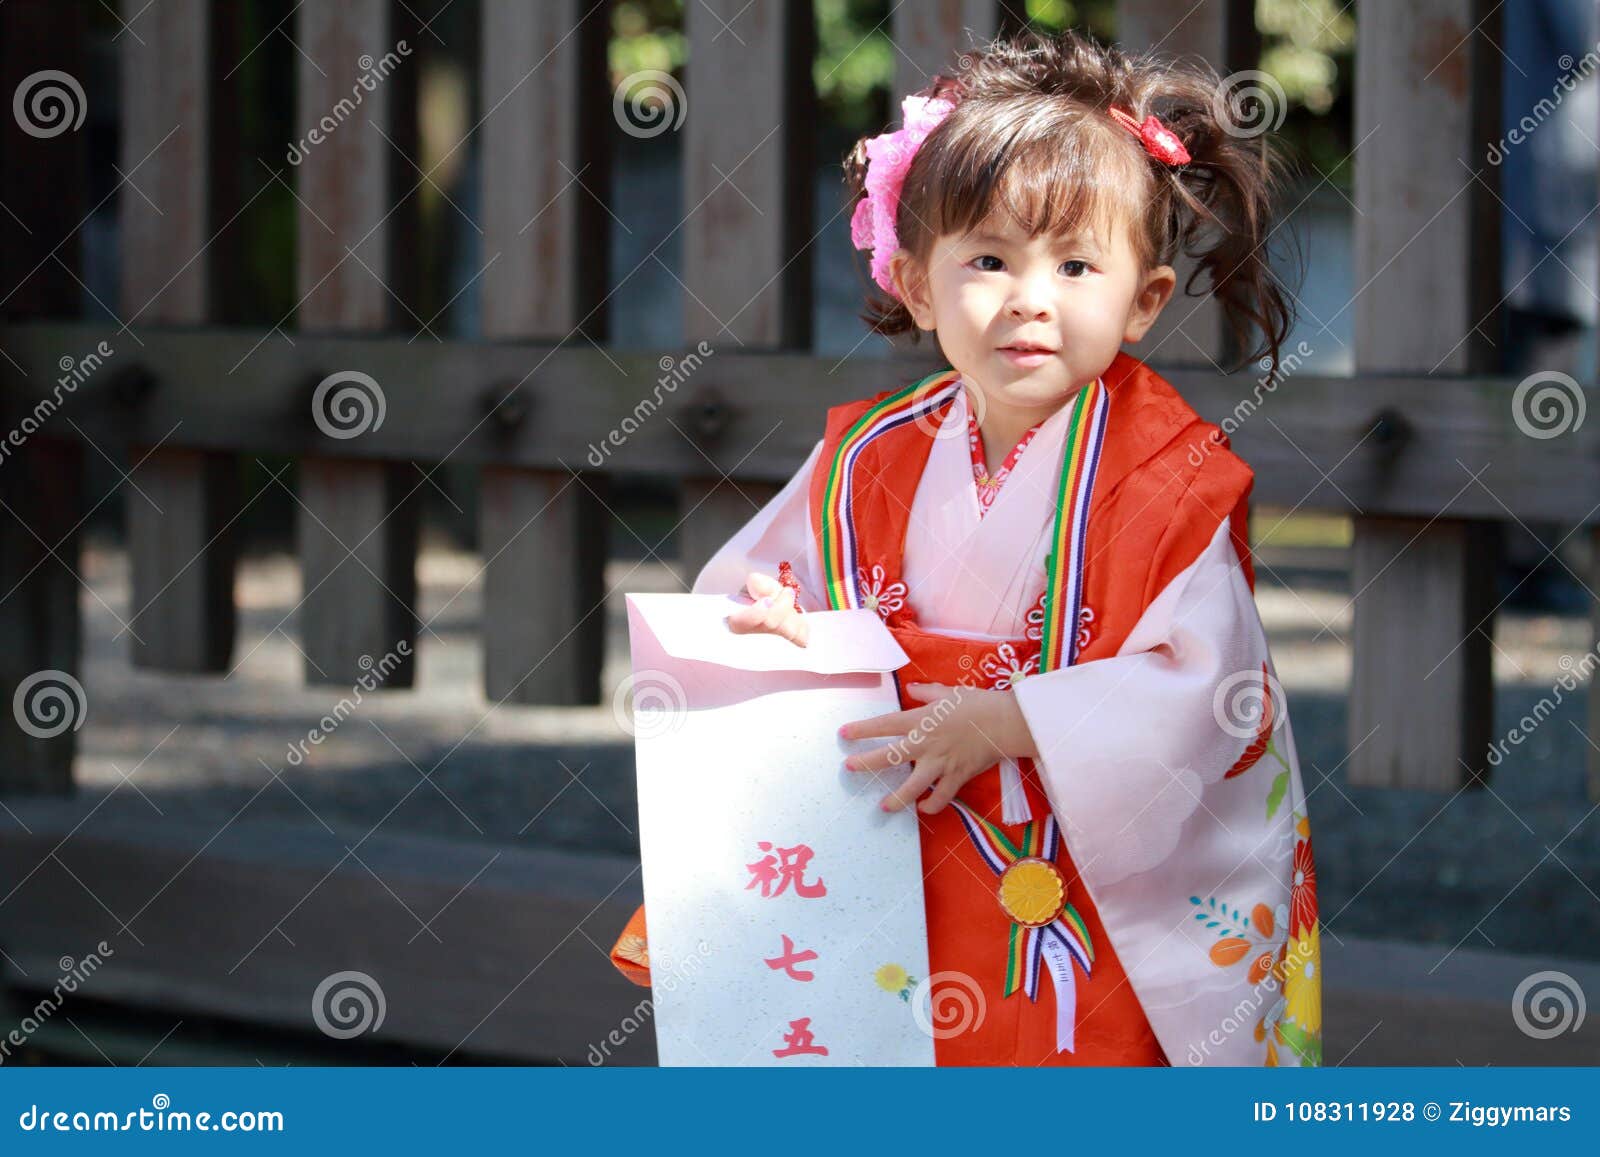 ребенка японку трахают фото 100